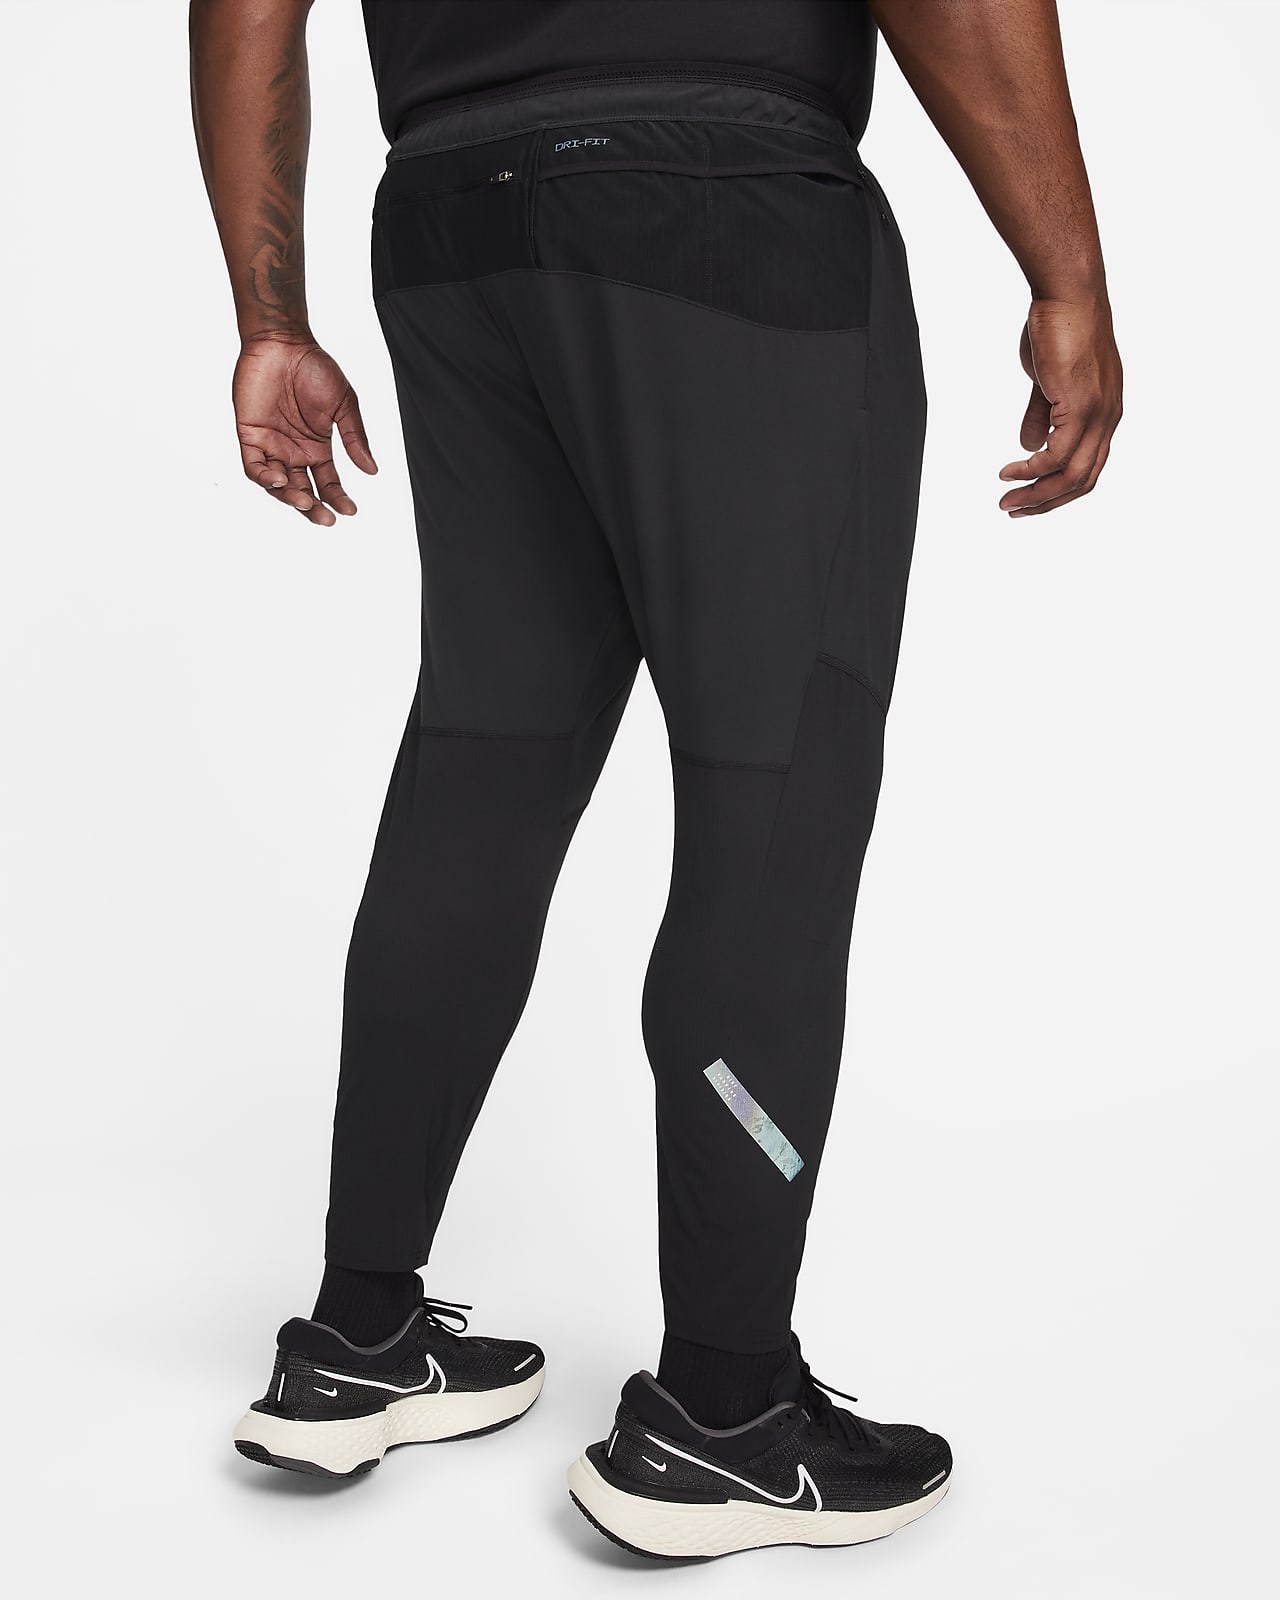 Men's Dri-FIT Running Trousers & Tights. Nike LU